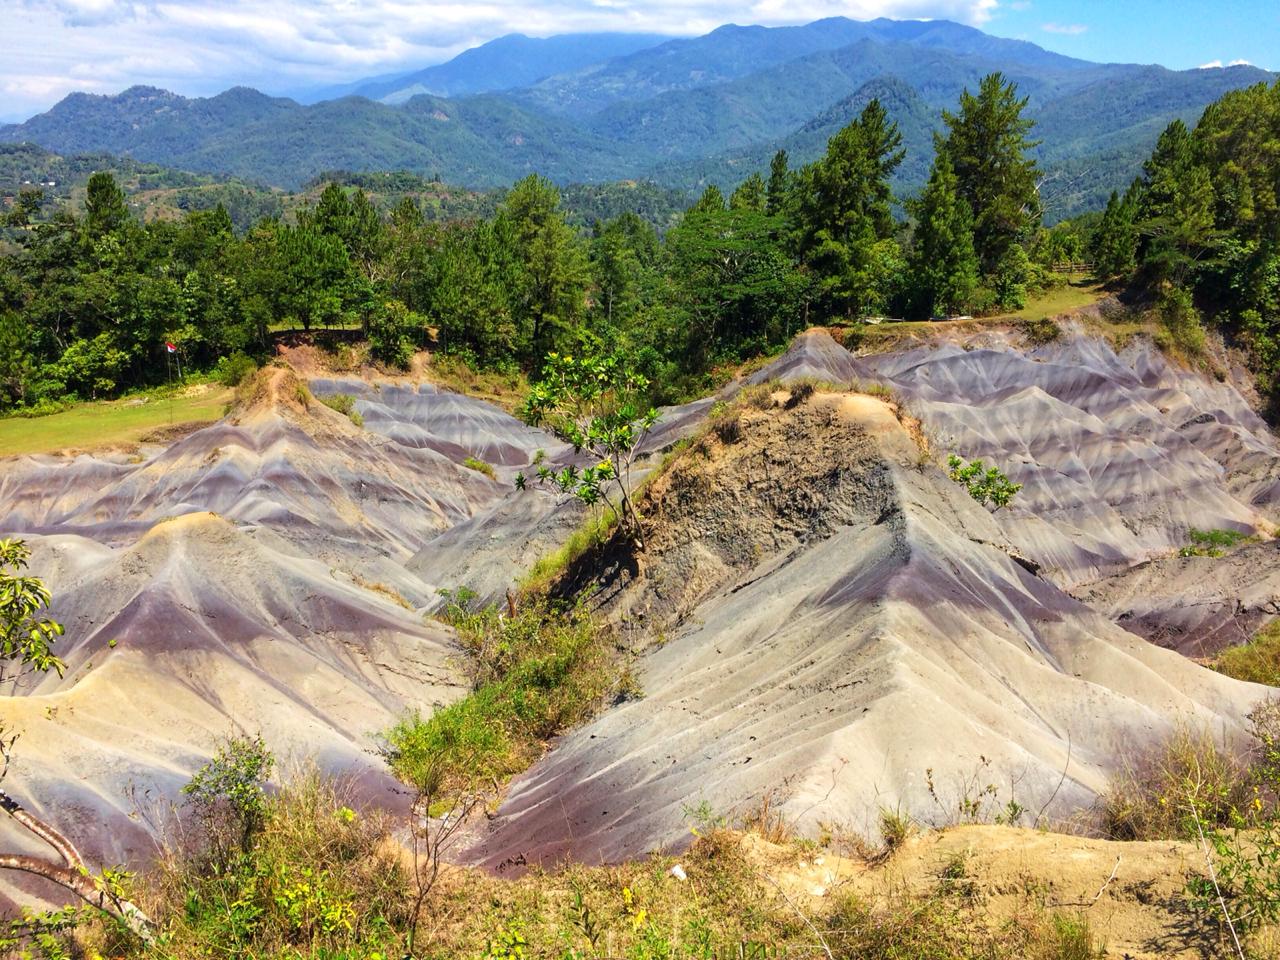 Harga Tiket Masuk Dan Lokasi Gumuk Pasir Sumalu Sulawesi Selatan